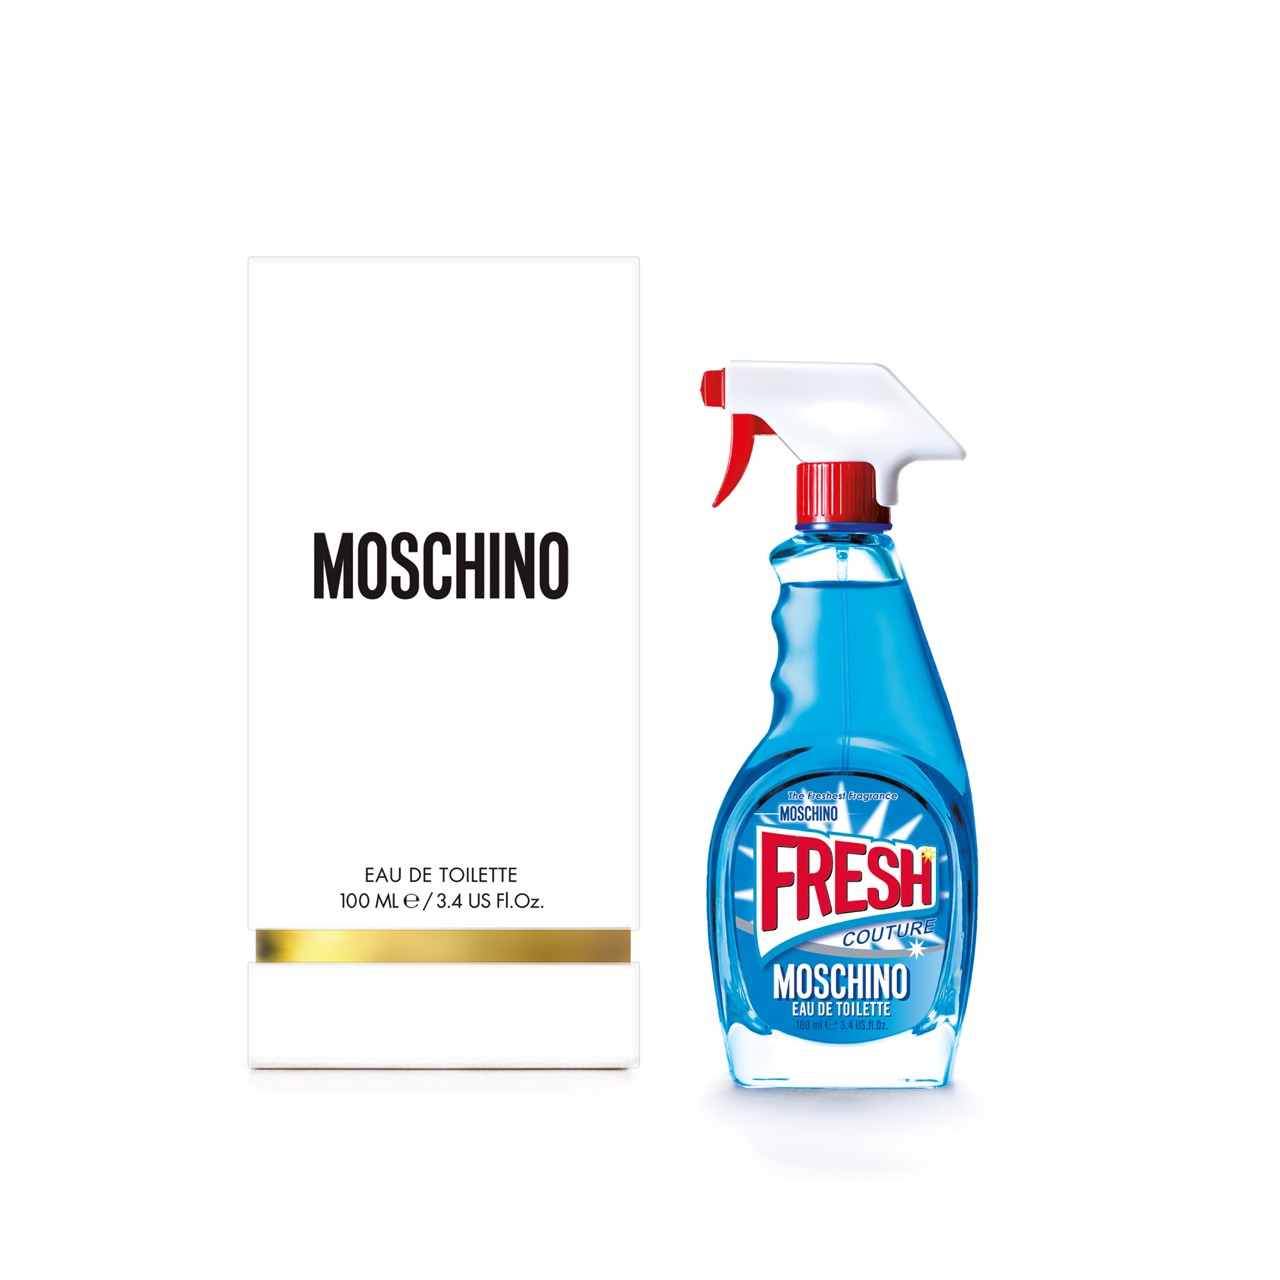 Moschino Fresh Couture Eau de Toilette 100ml (3.4fl.oz.)